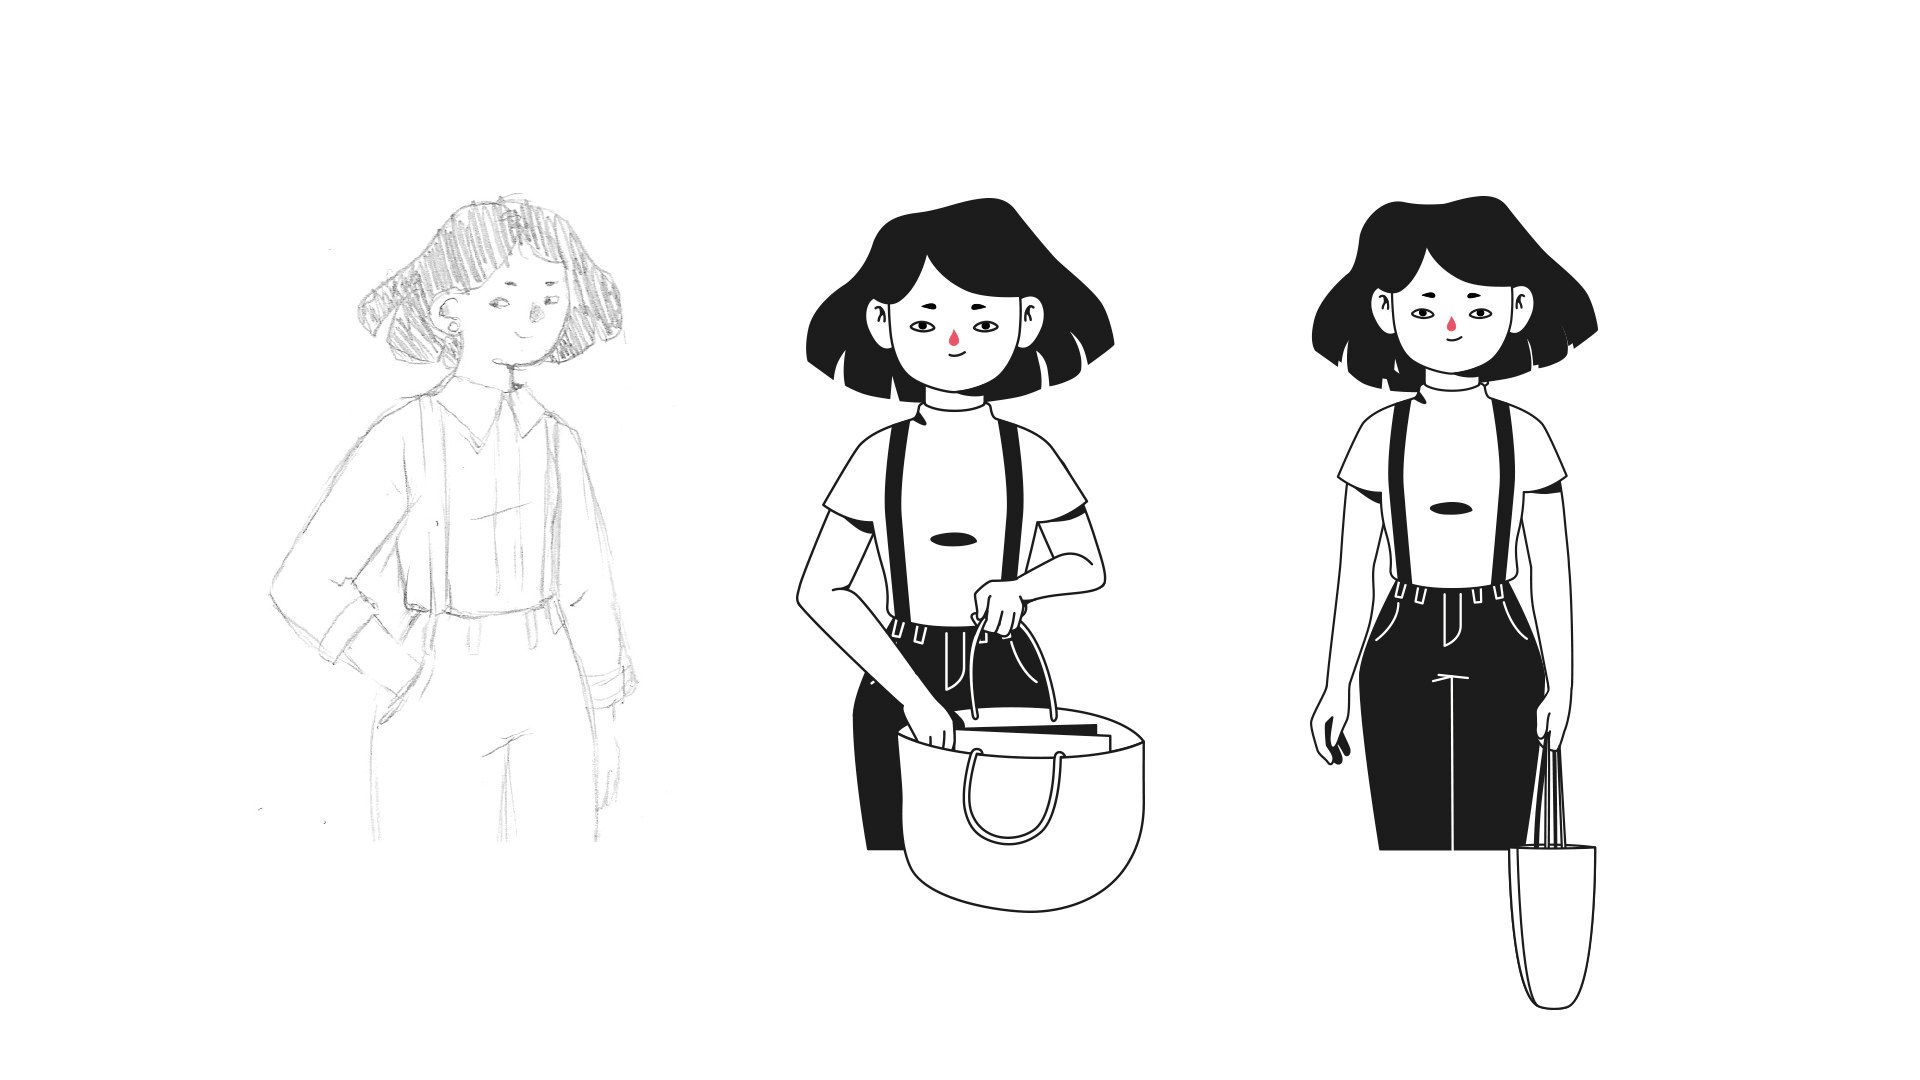 Girl character design